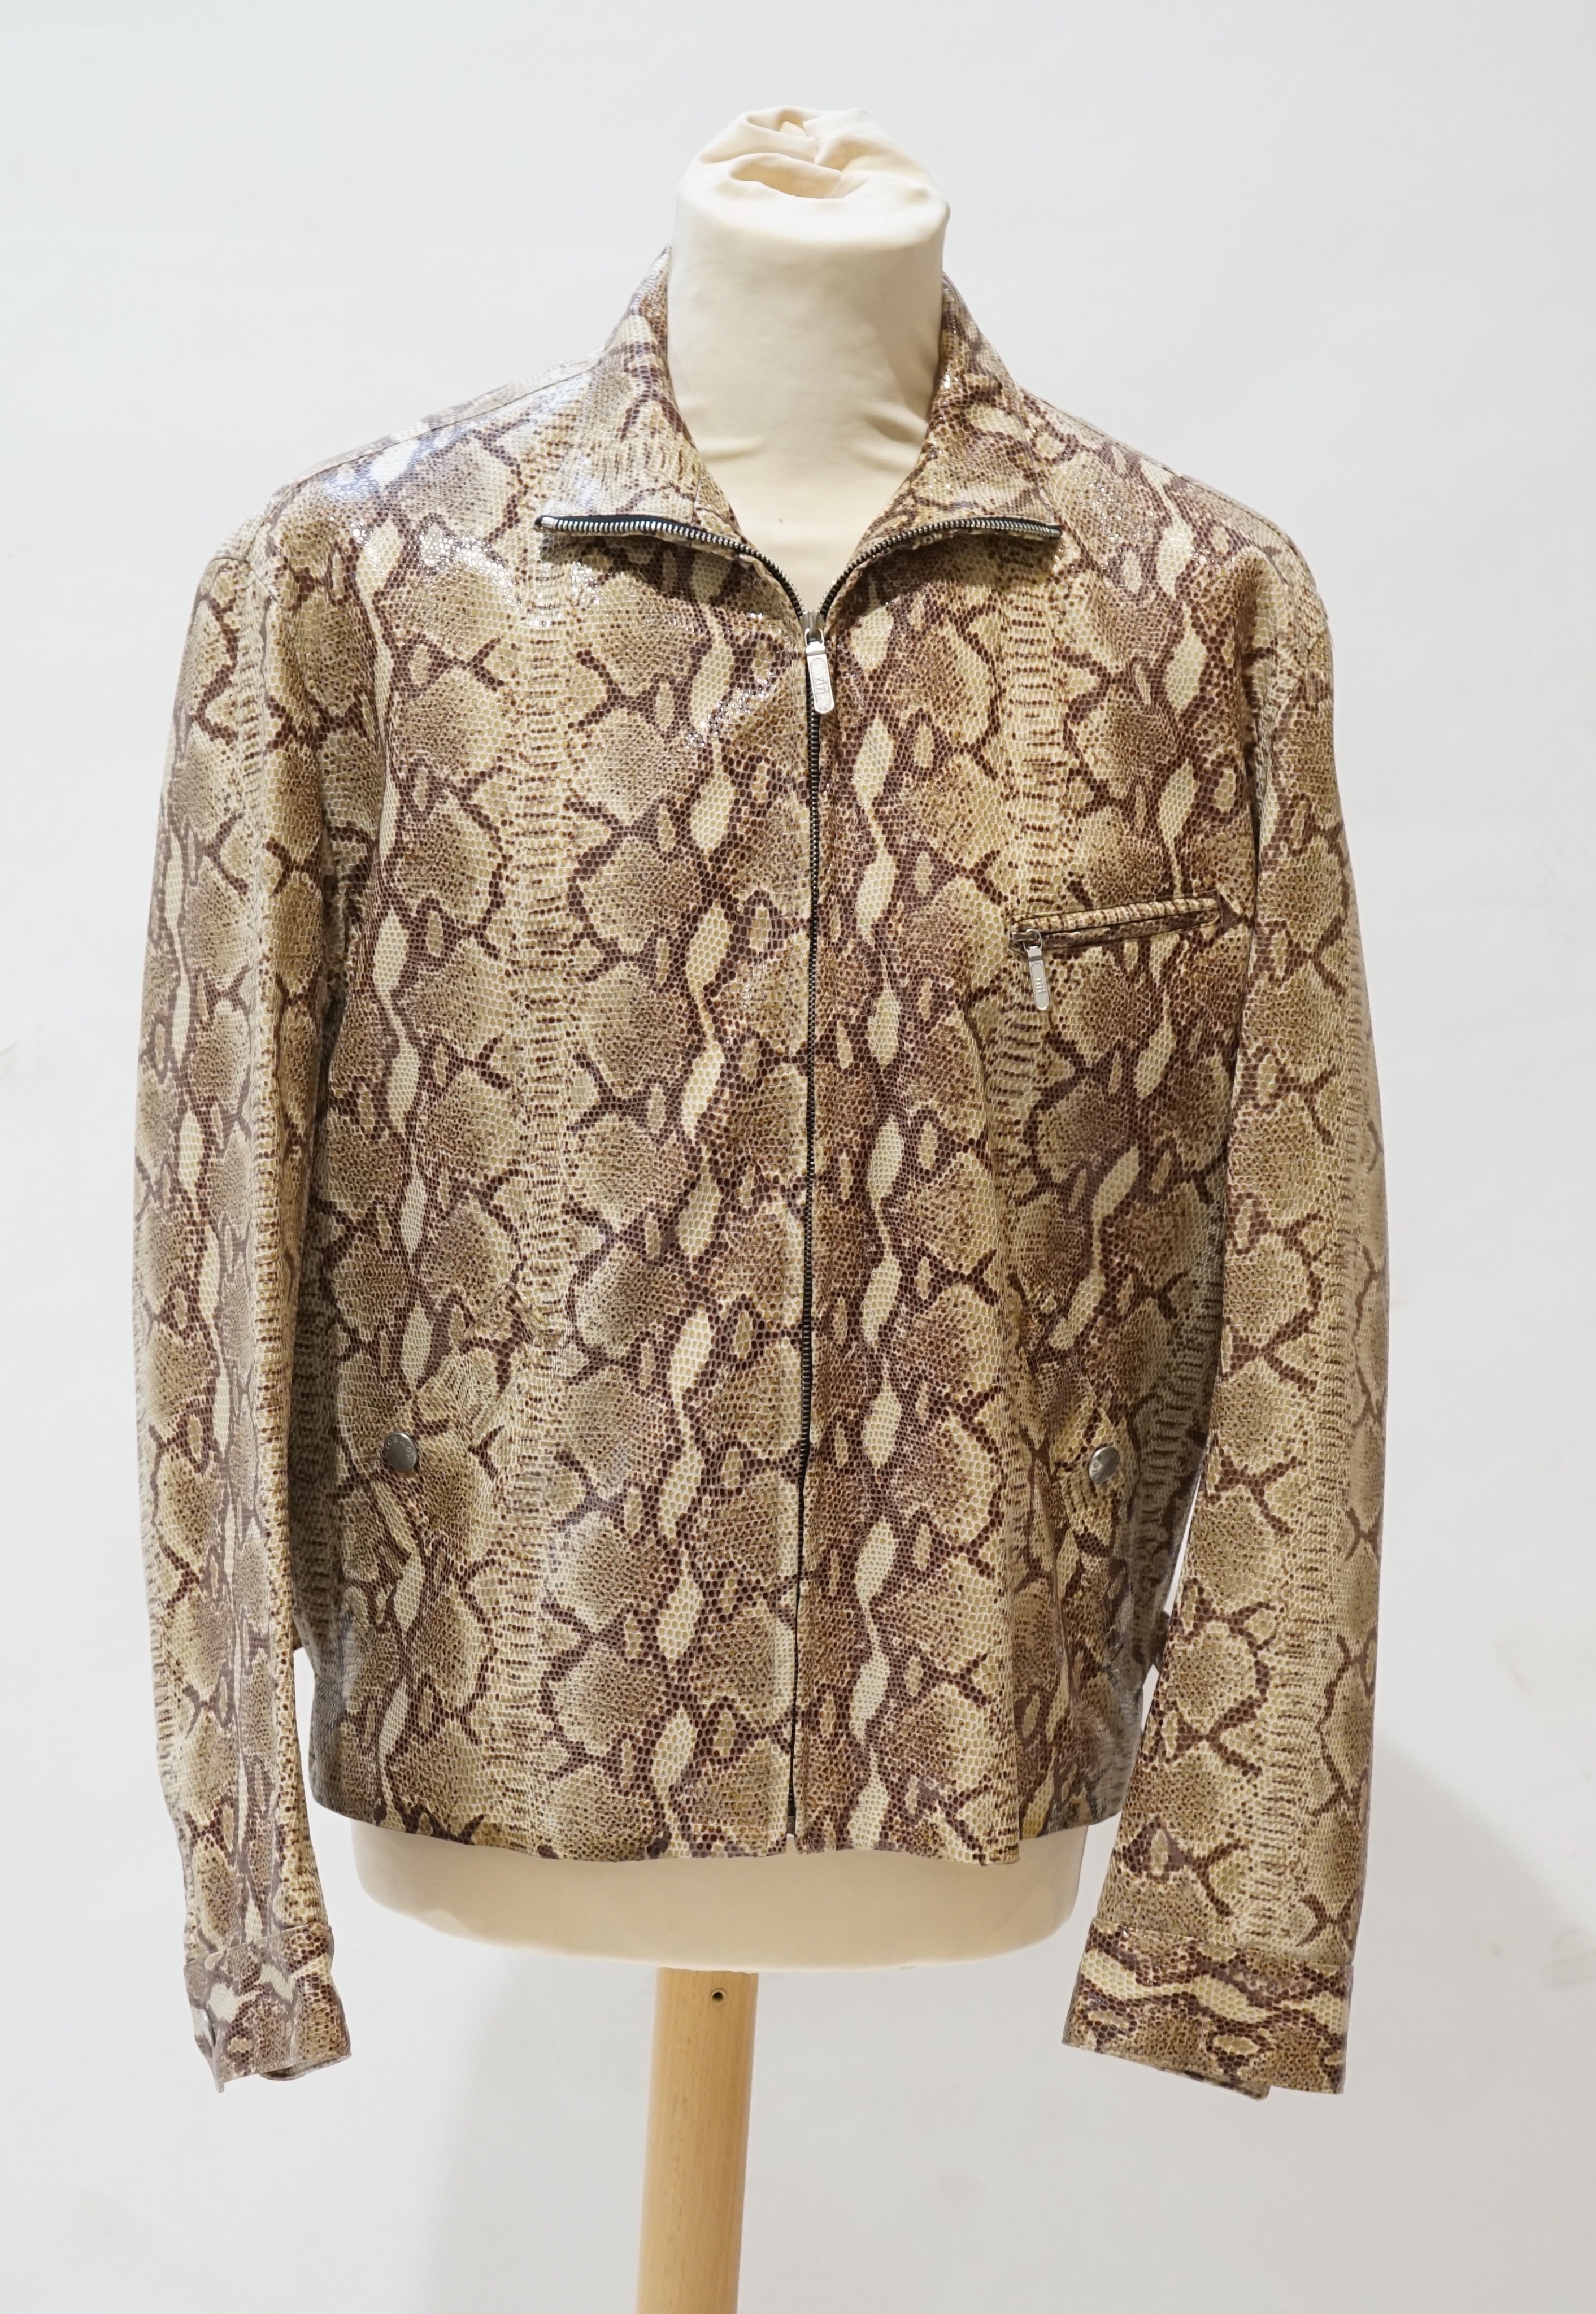 A gentleman's John Richmond snakeskin effect leather jacket, size medium